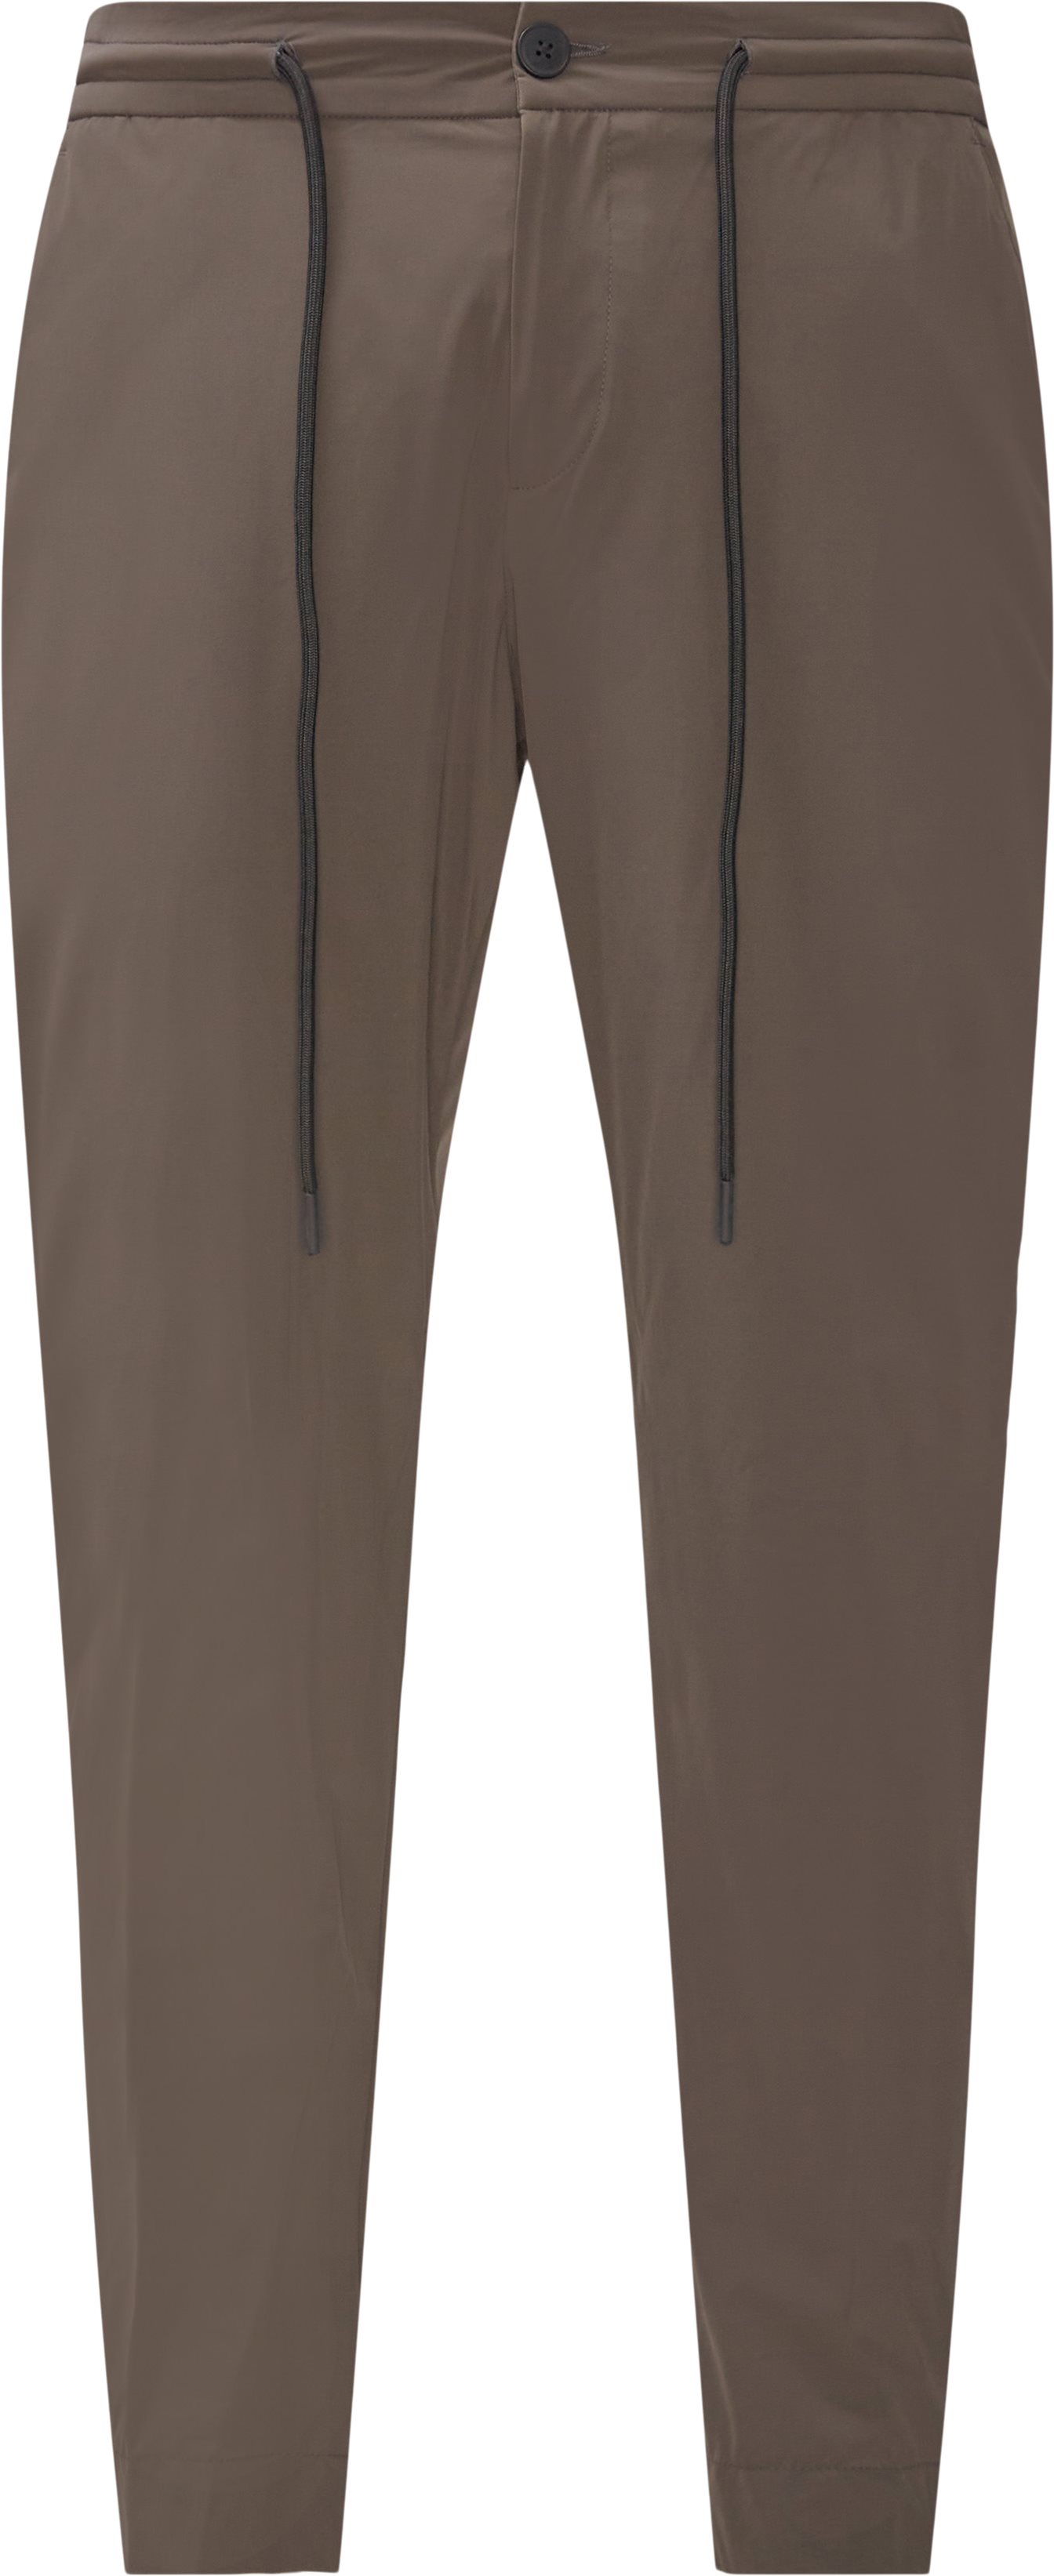 Tech Pants - Bukser - Regular fit - Army